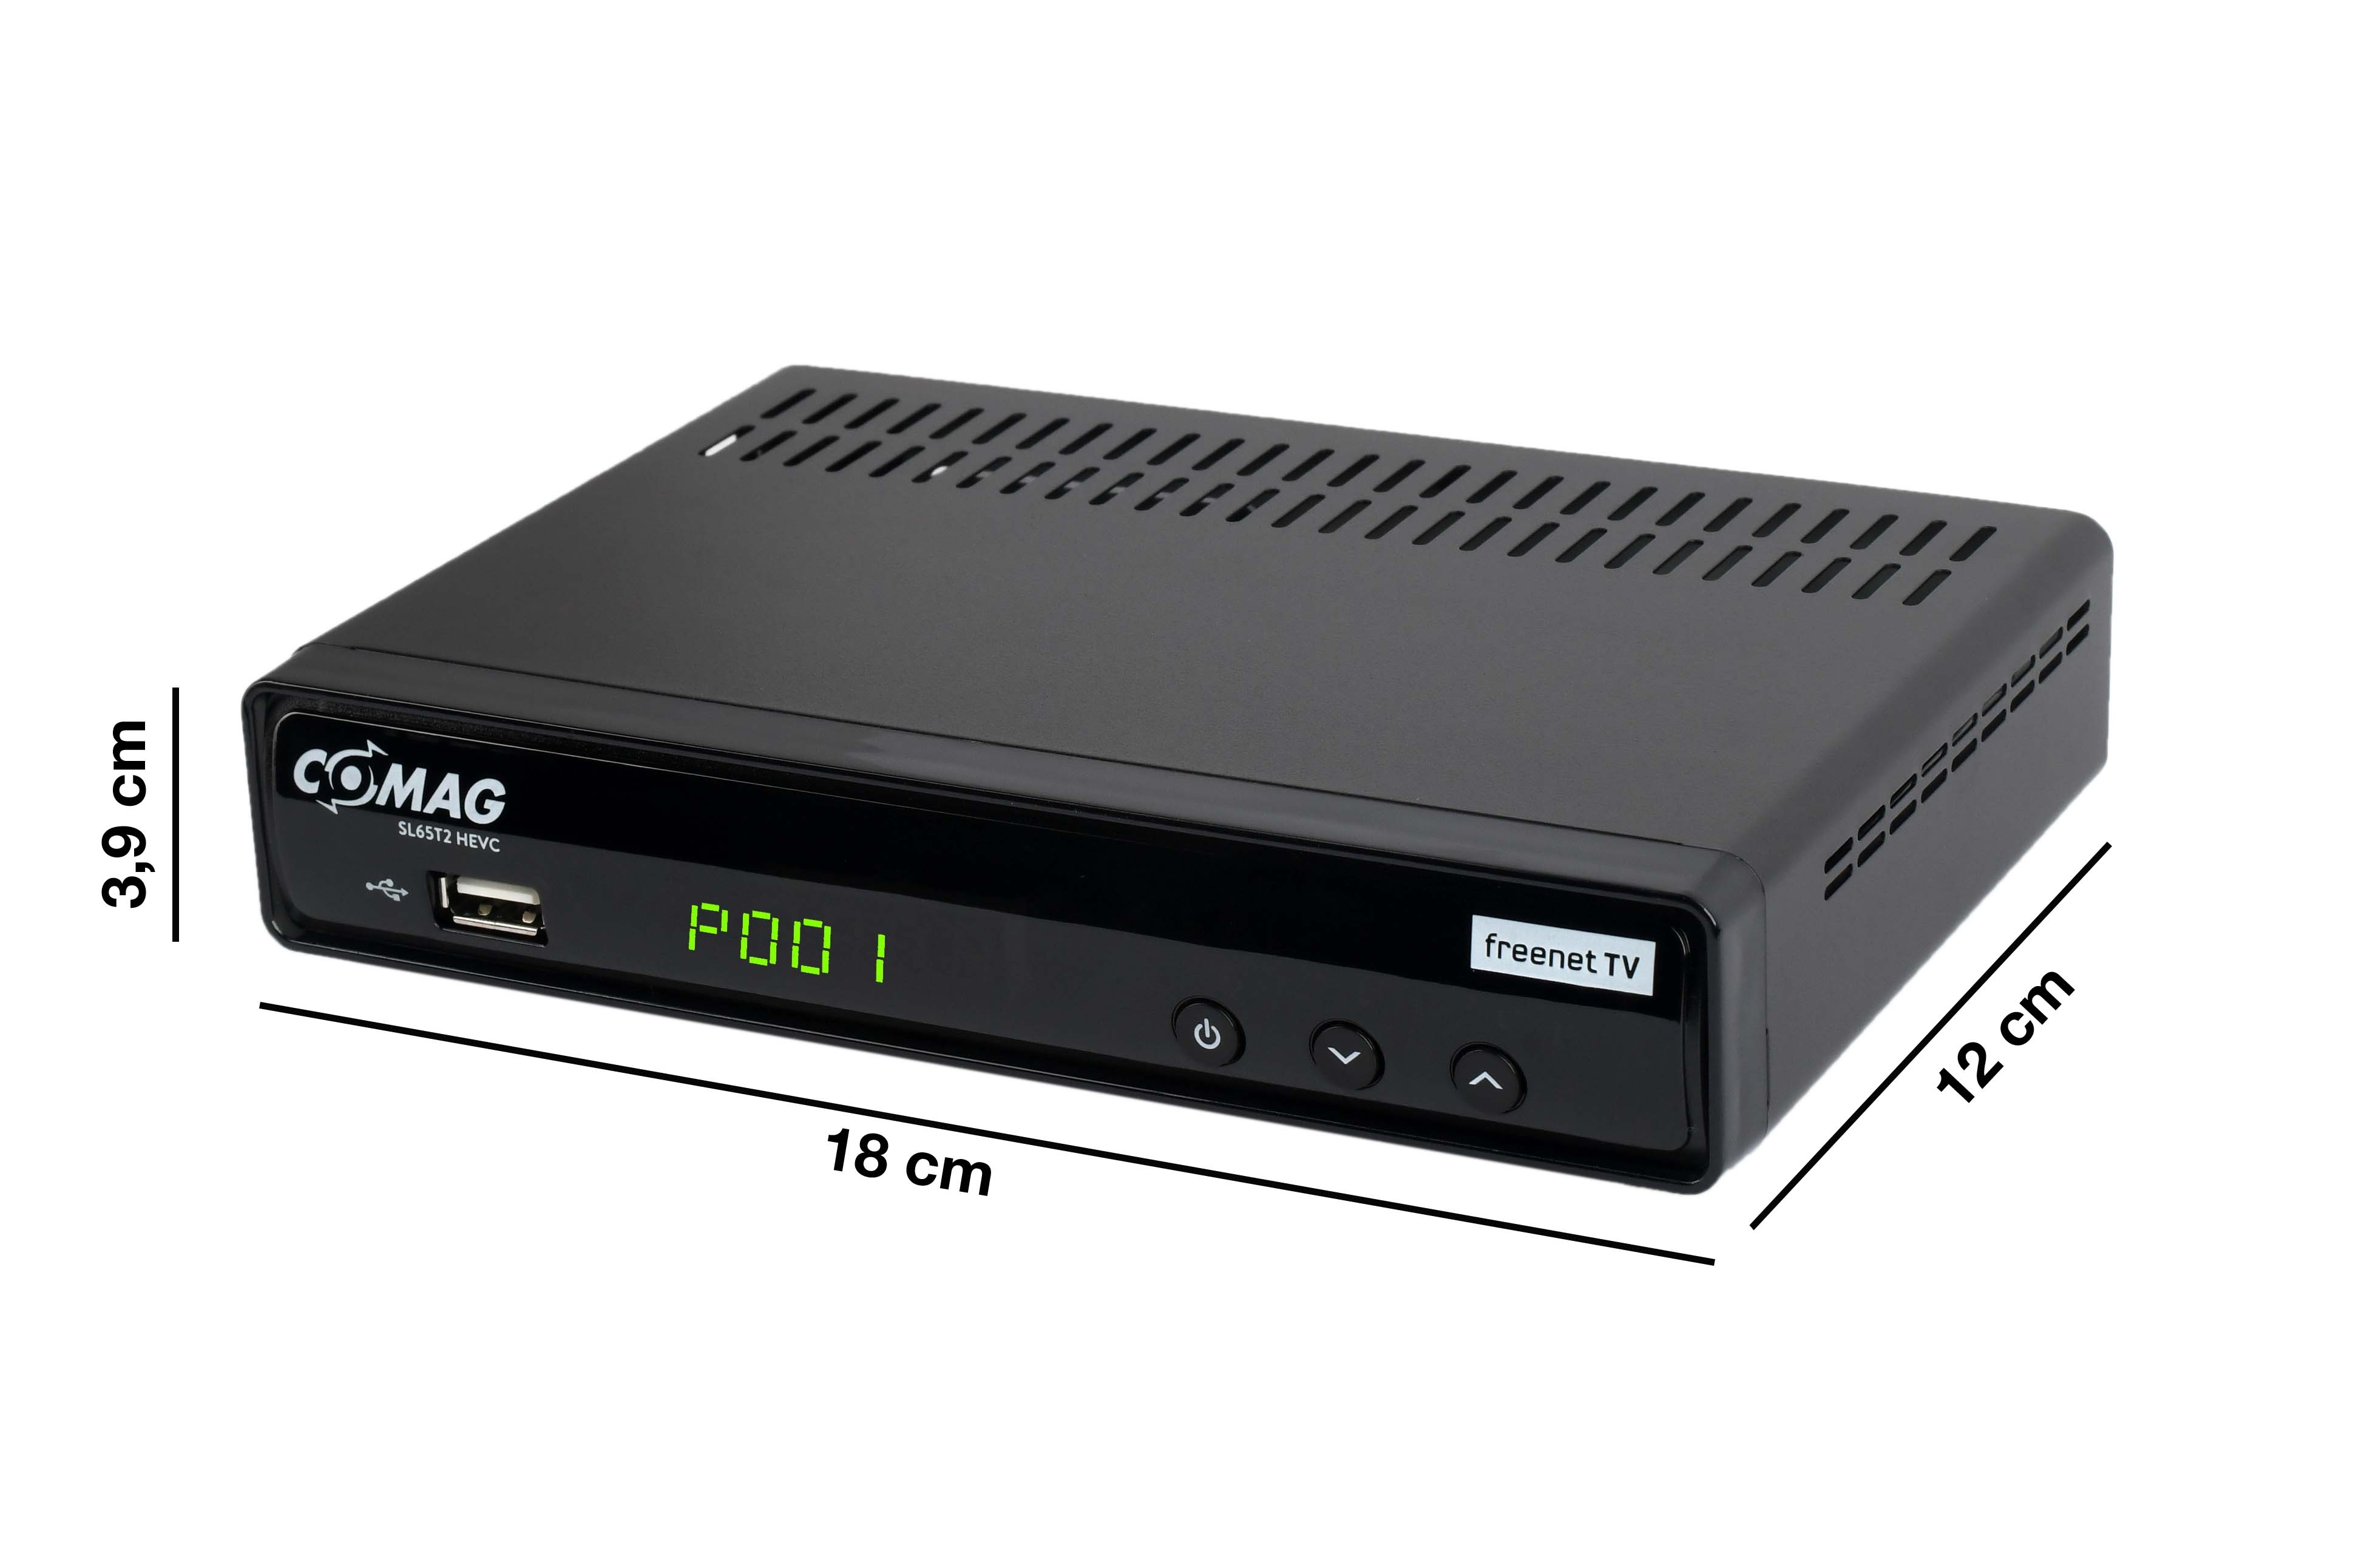 (HDTV, DVB-T2 Bundel SL65T2 COMAG HDMI DVB-T, PVR-Funktion, DVB-T-Receiver (H.265), (H.264), schwarz) DVB-T2